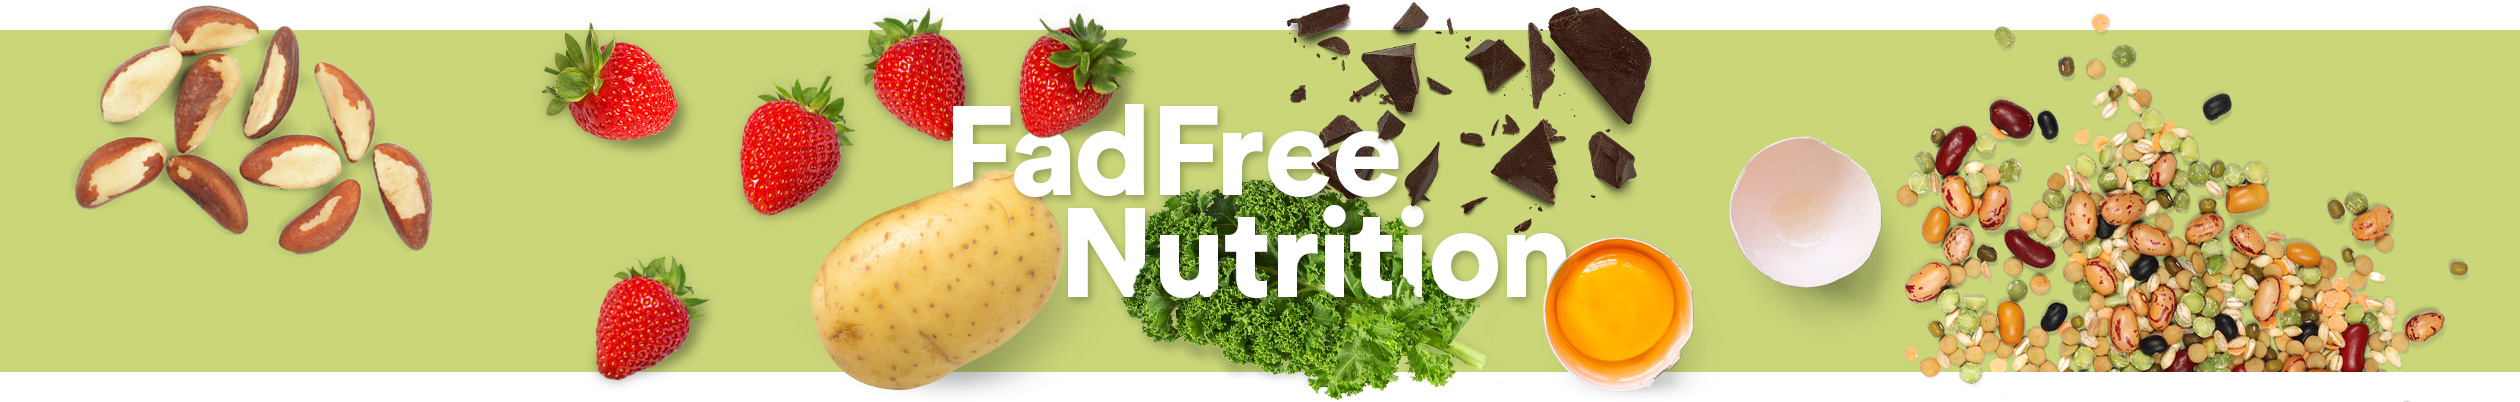 Fad Free Nutrition